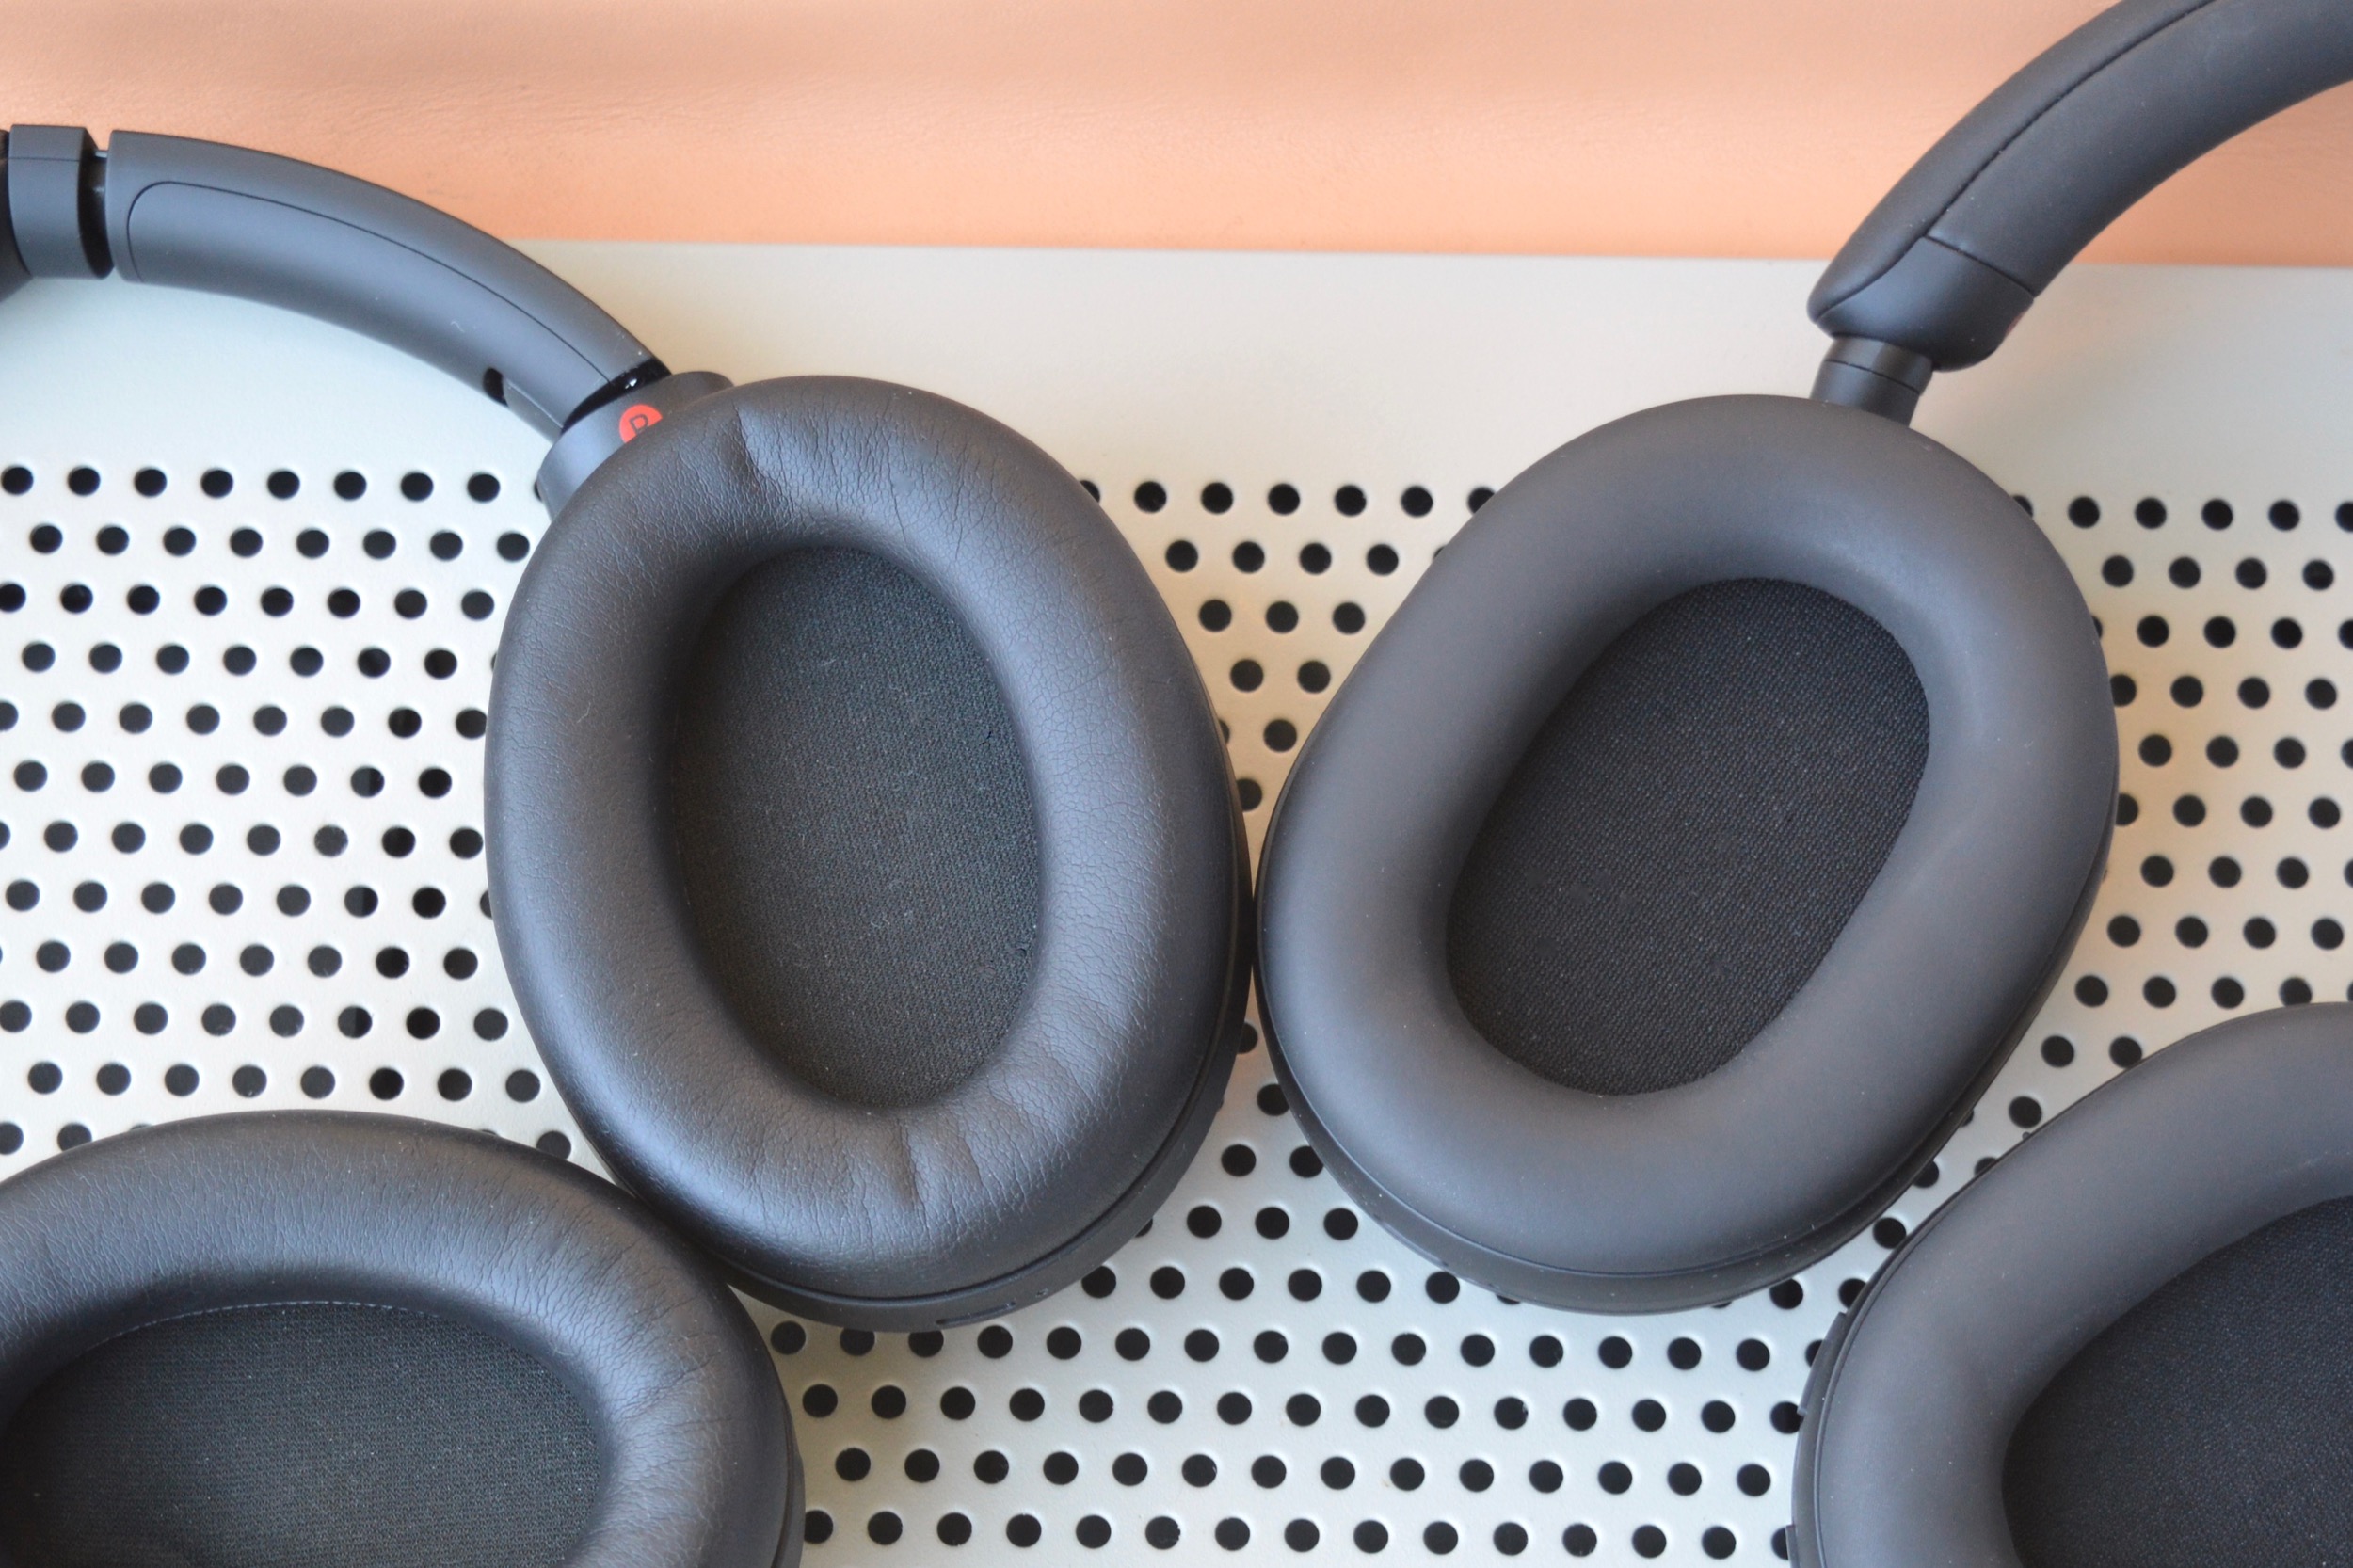 SONY Wireless Noise Canceling Headphones Silver WH-1000XM4 S Bluetooth  Alexa